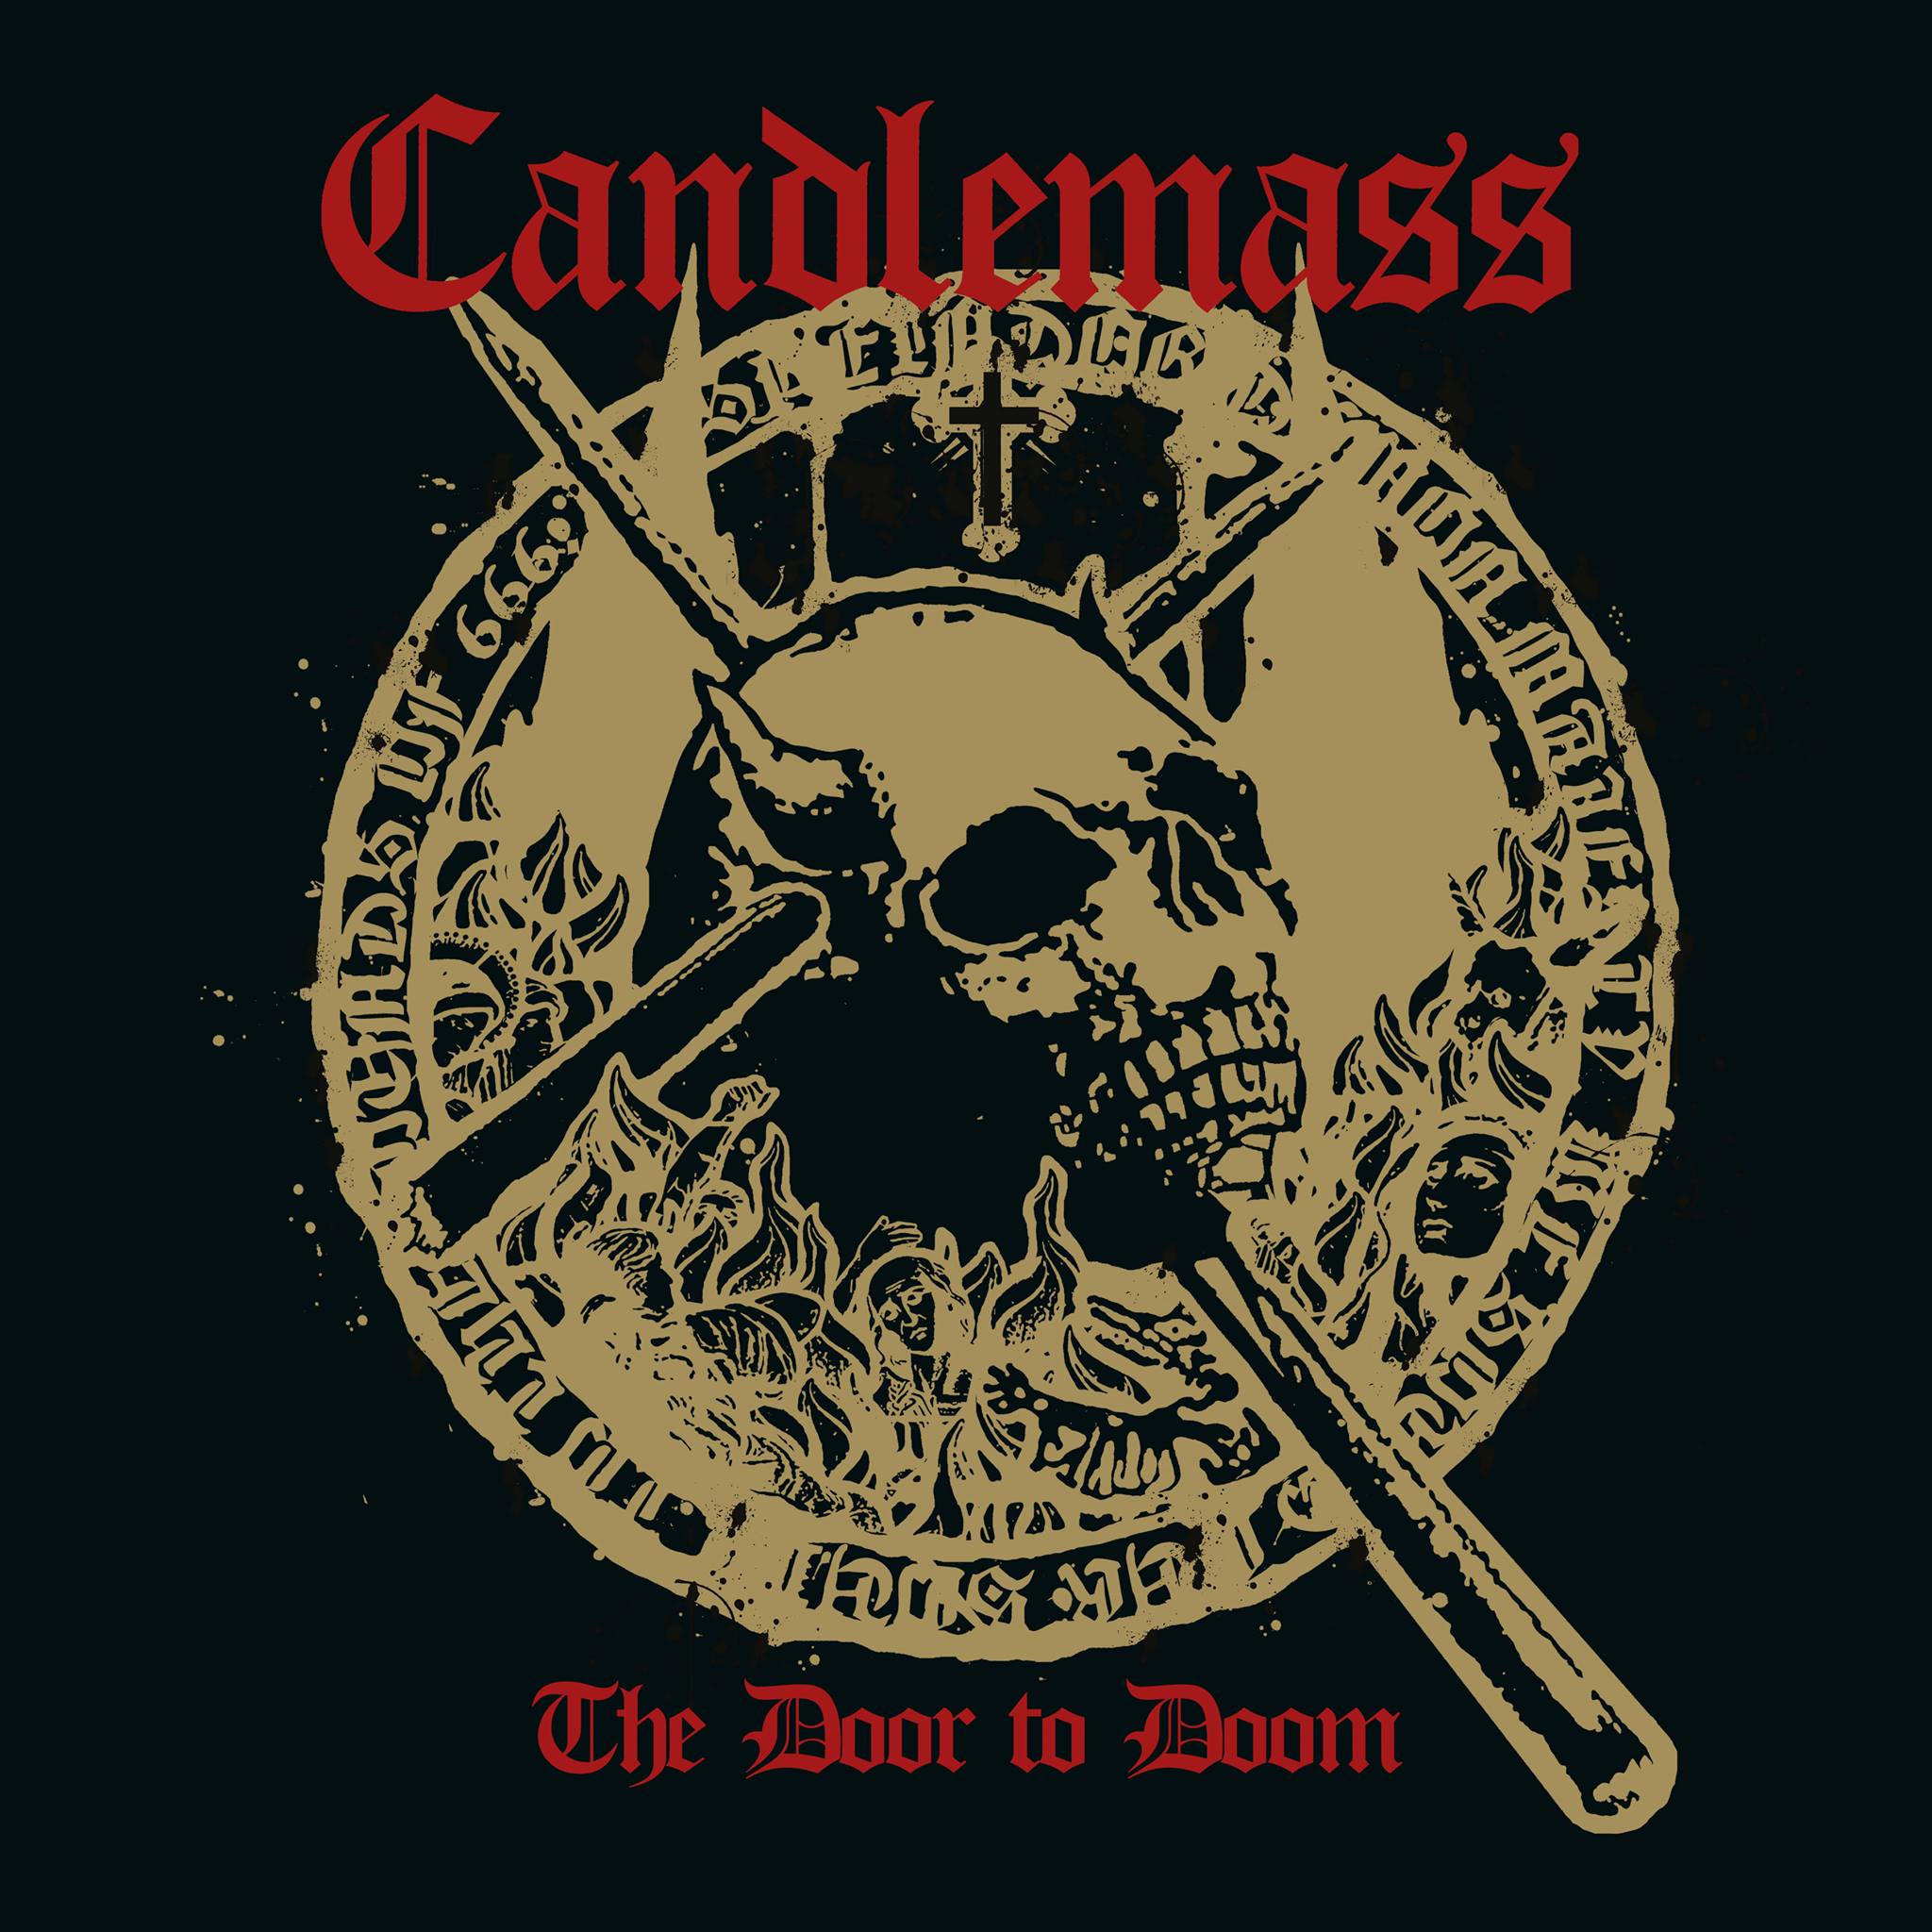 Candlemass to release ‘The Door To Doom’ in February